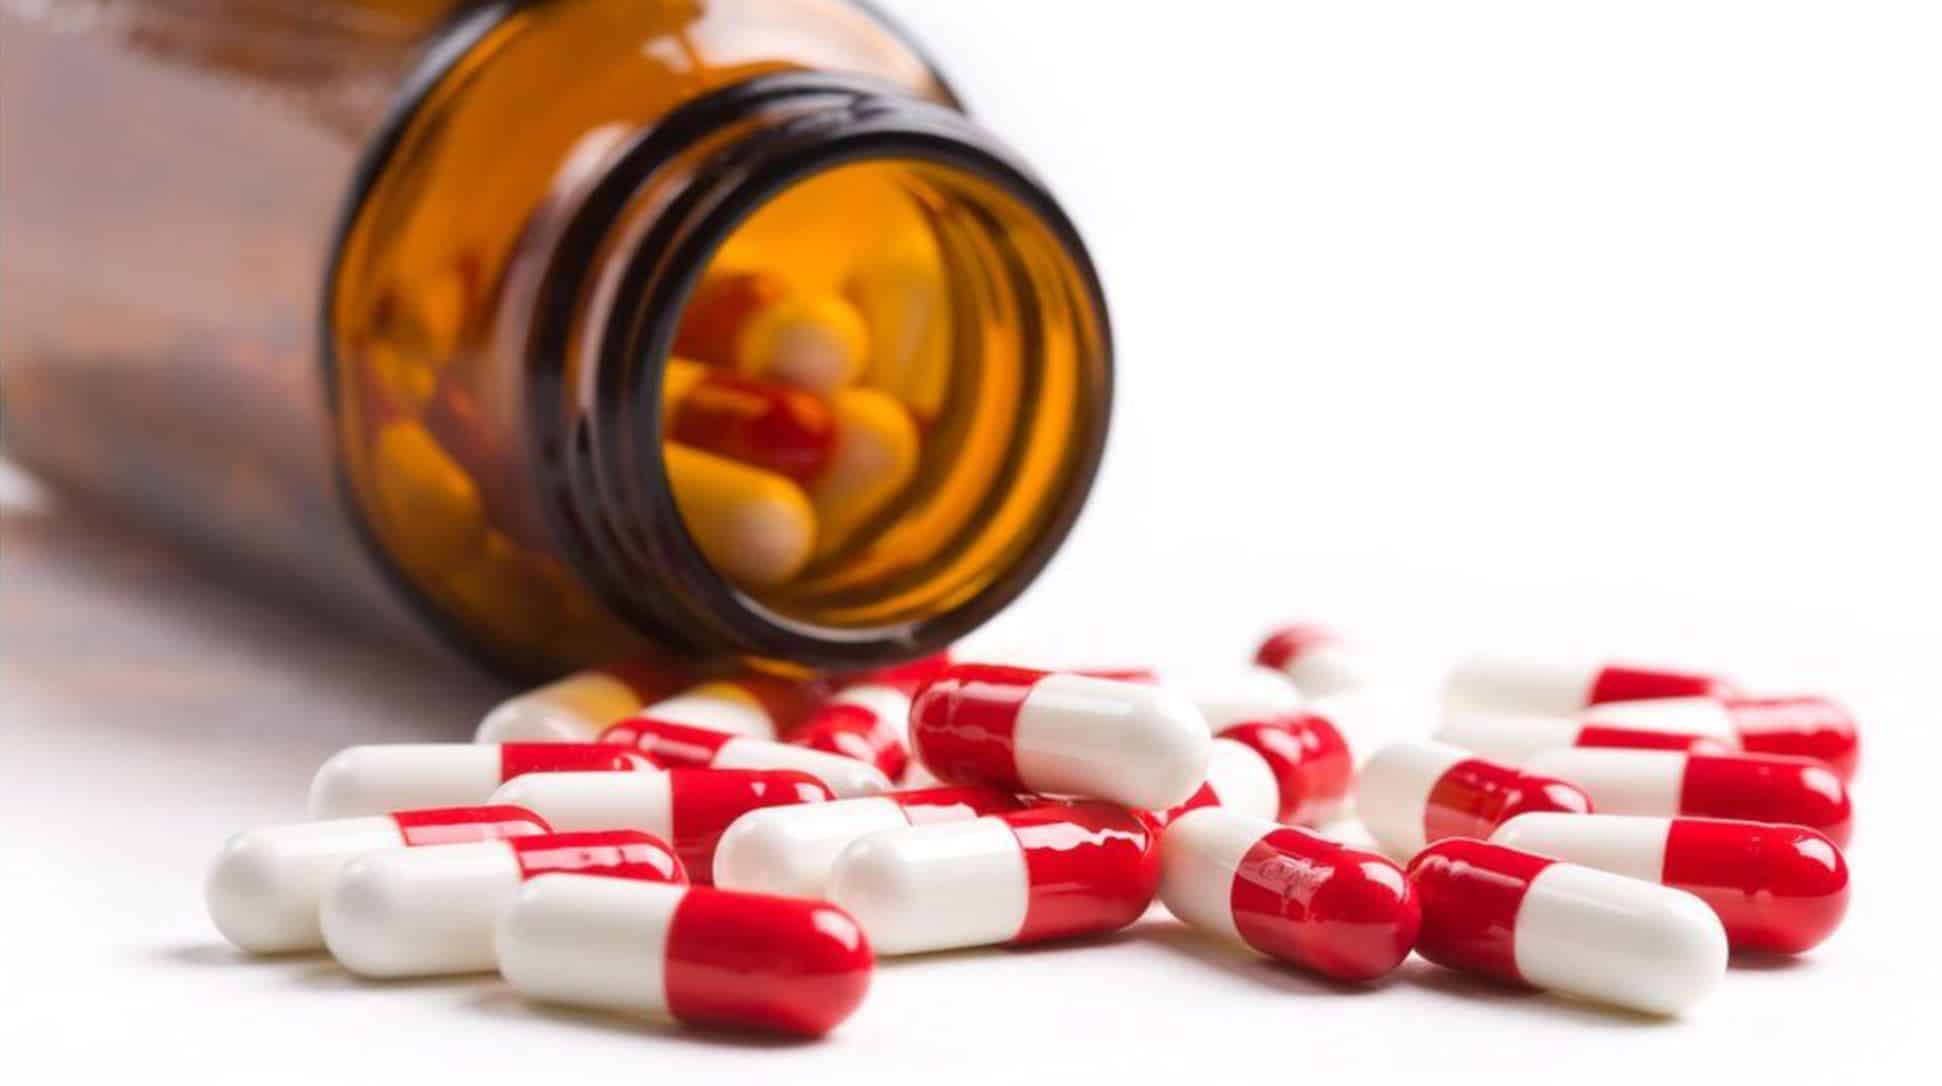 Antibiotics prices ‘hiked up to take advantage’ of demand